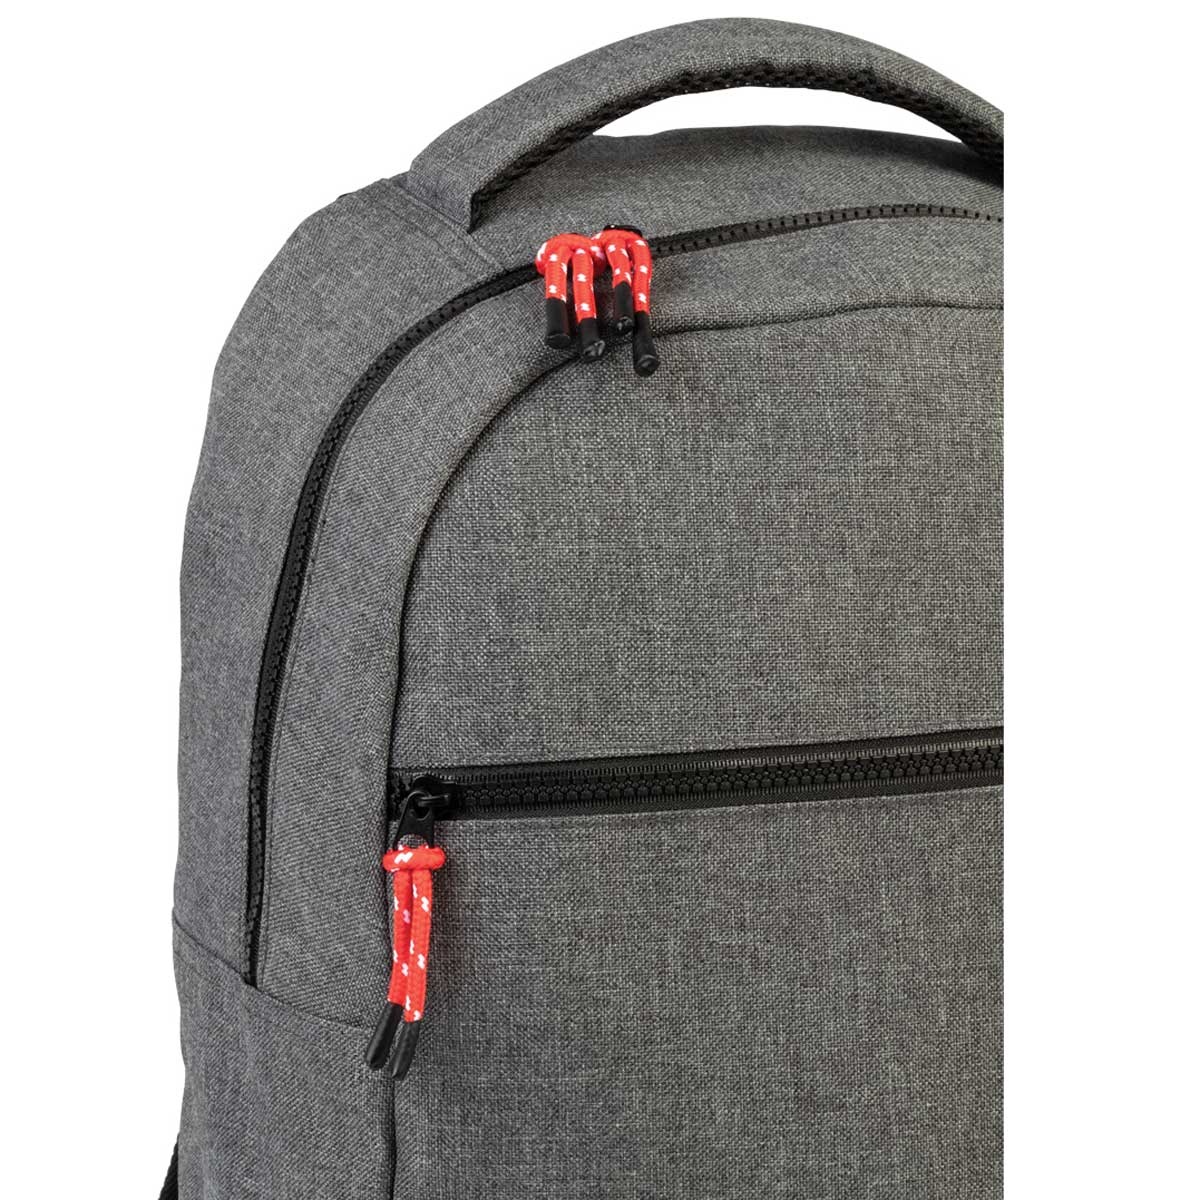 GEWO Backpack Spy grey/red